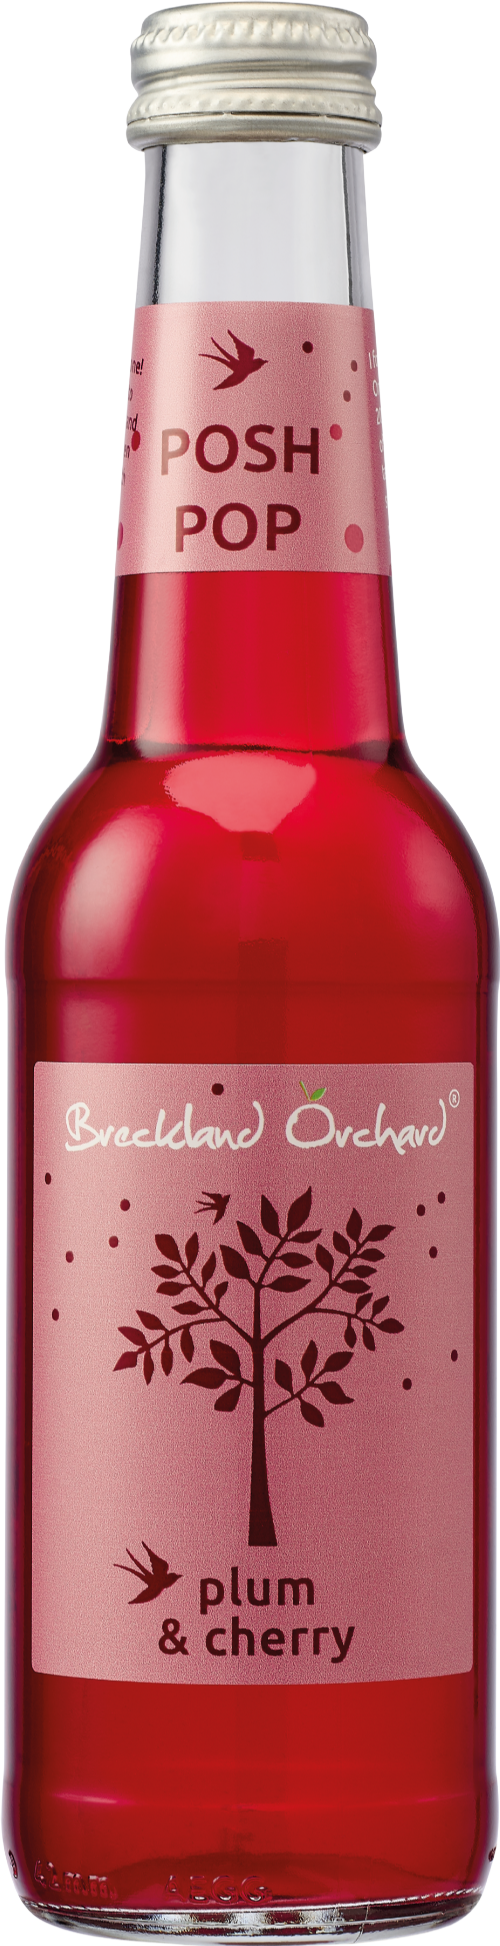 BRECKLAND ORCHARD Posh Pop - Plum & Cherry 275ml